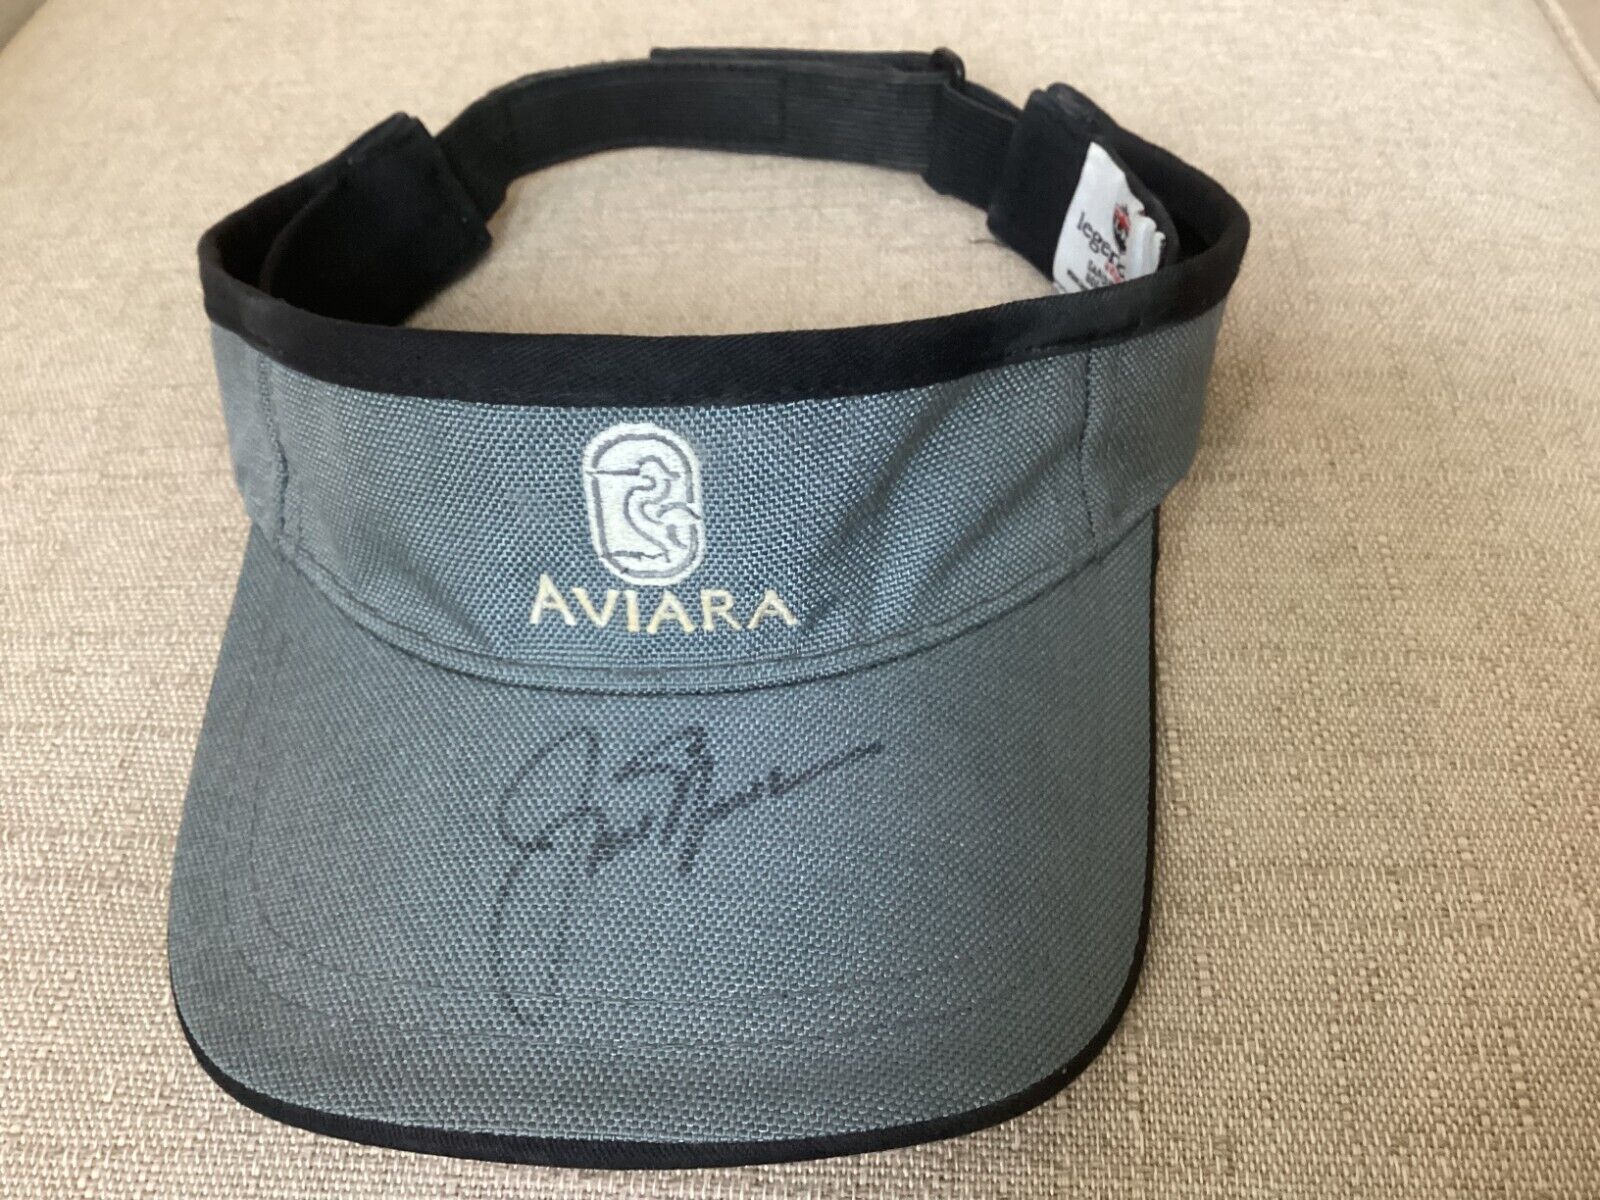 Jack Nicklaus Signed Autographed Aviara Golf Visor